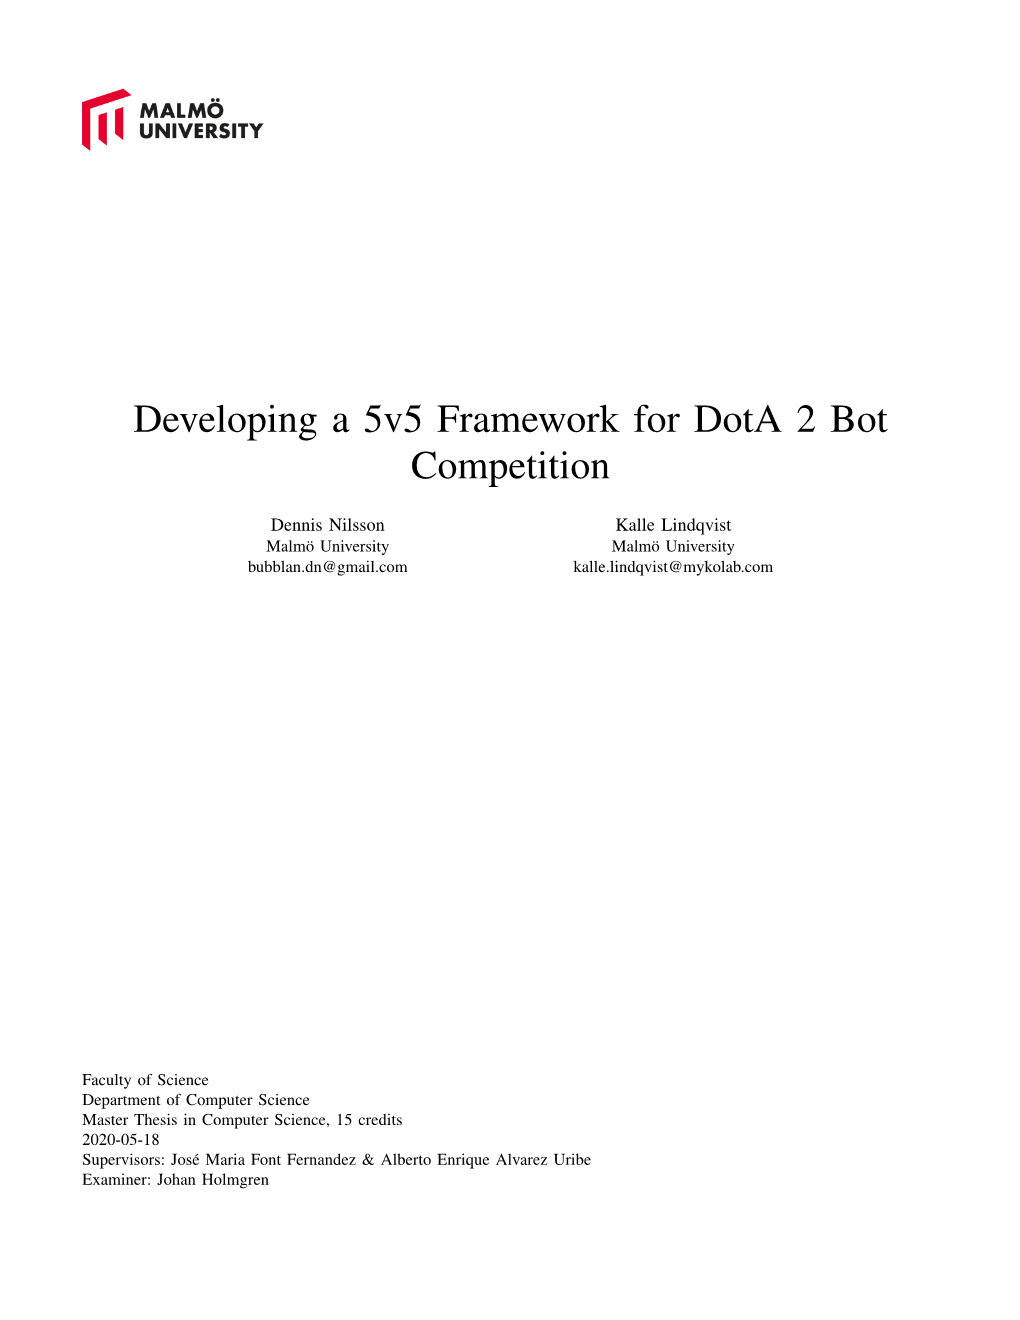 Developing a 5V5 Framework for Dota 2 Bot Competition